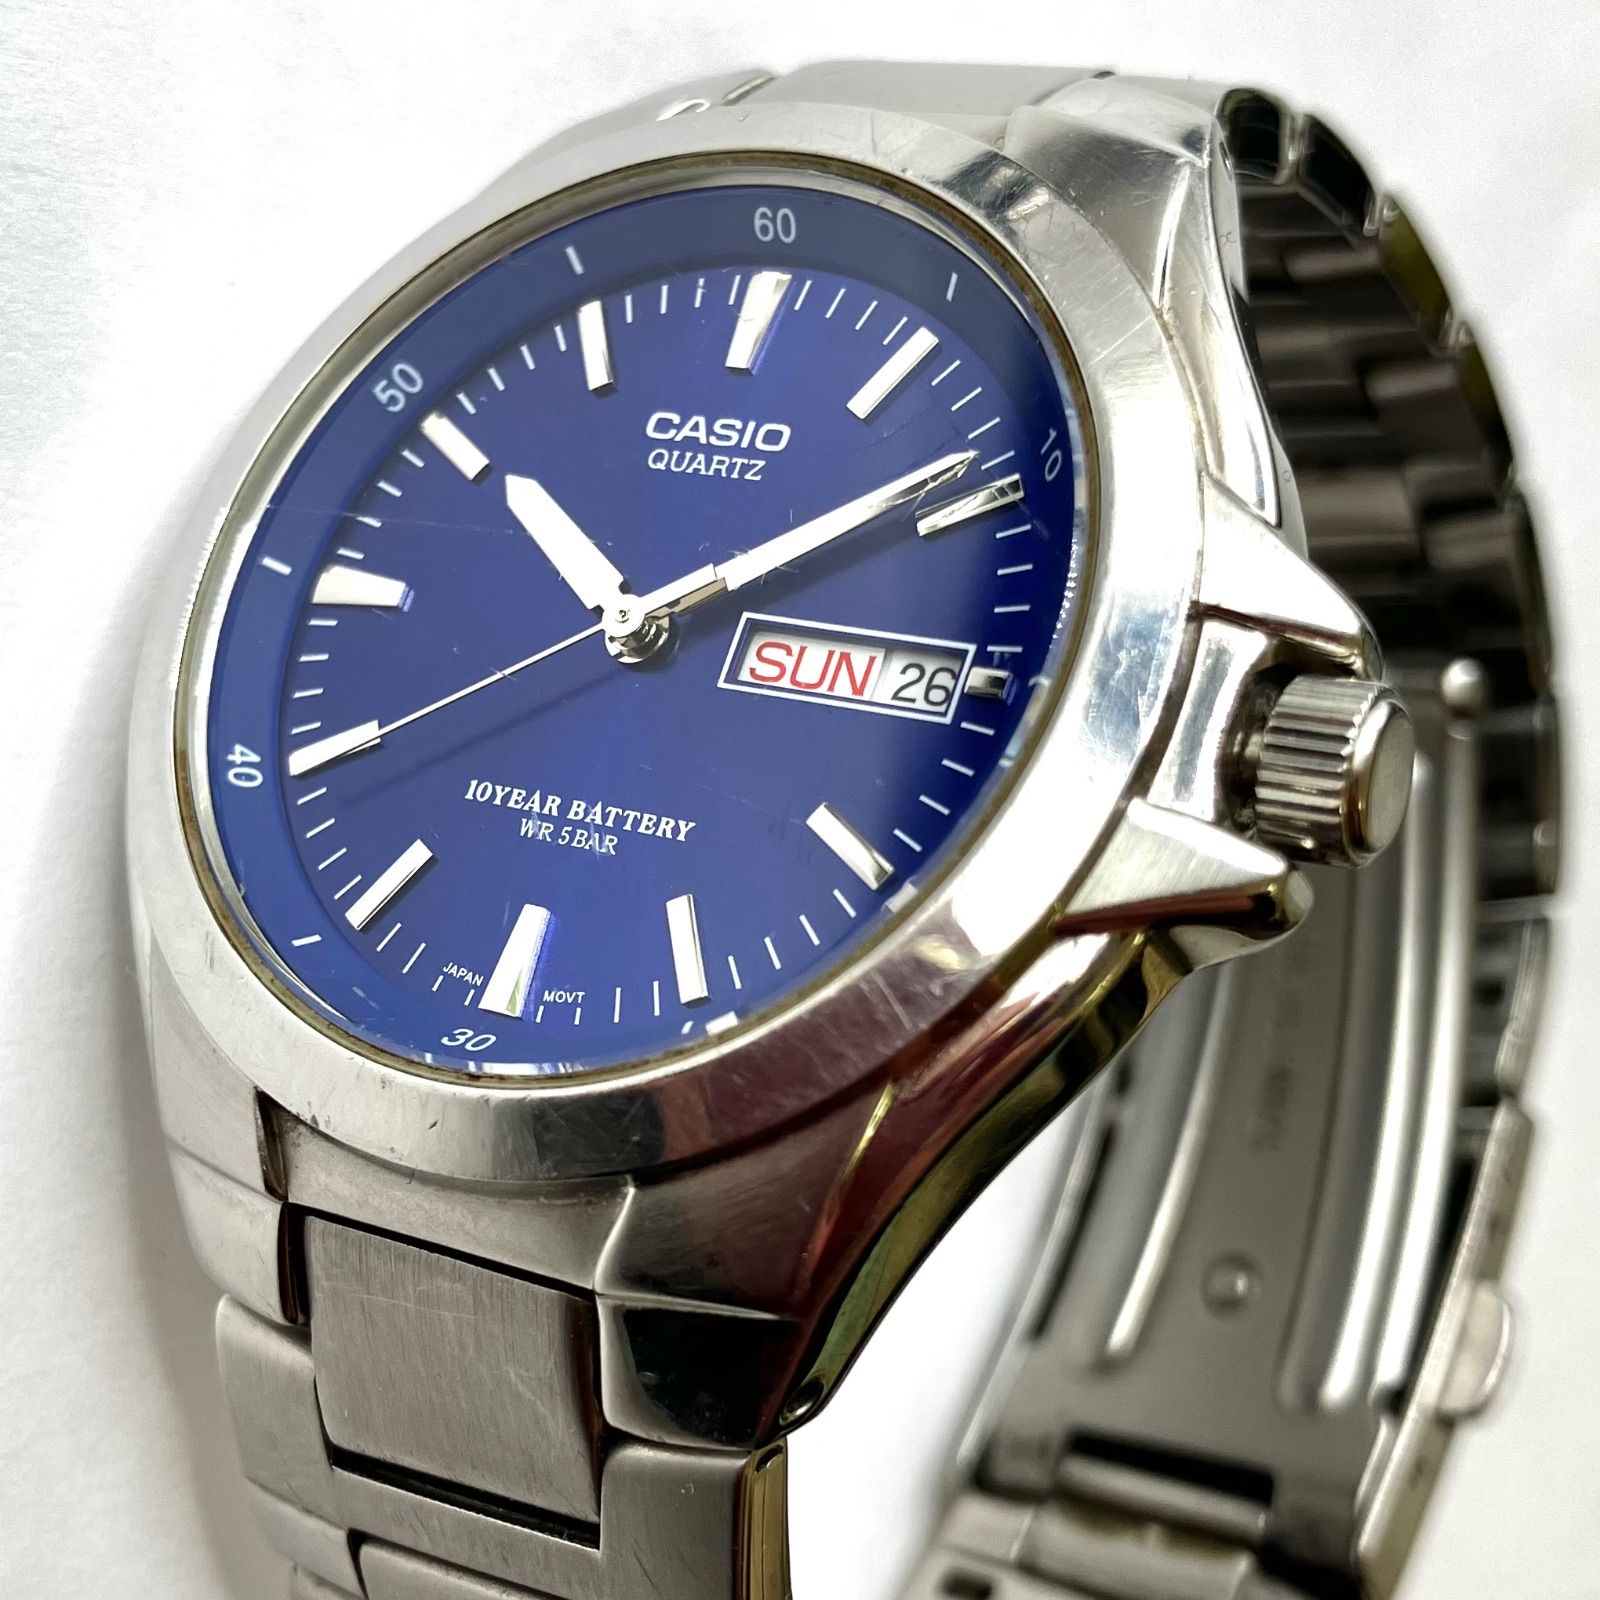 M] CASIO カシオ コレクション 腕時計 クオーツ MTP-1228DJ キズ有 ブルー×シルバー - ブランド腕時計